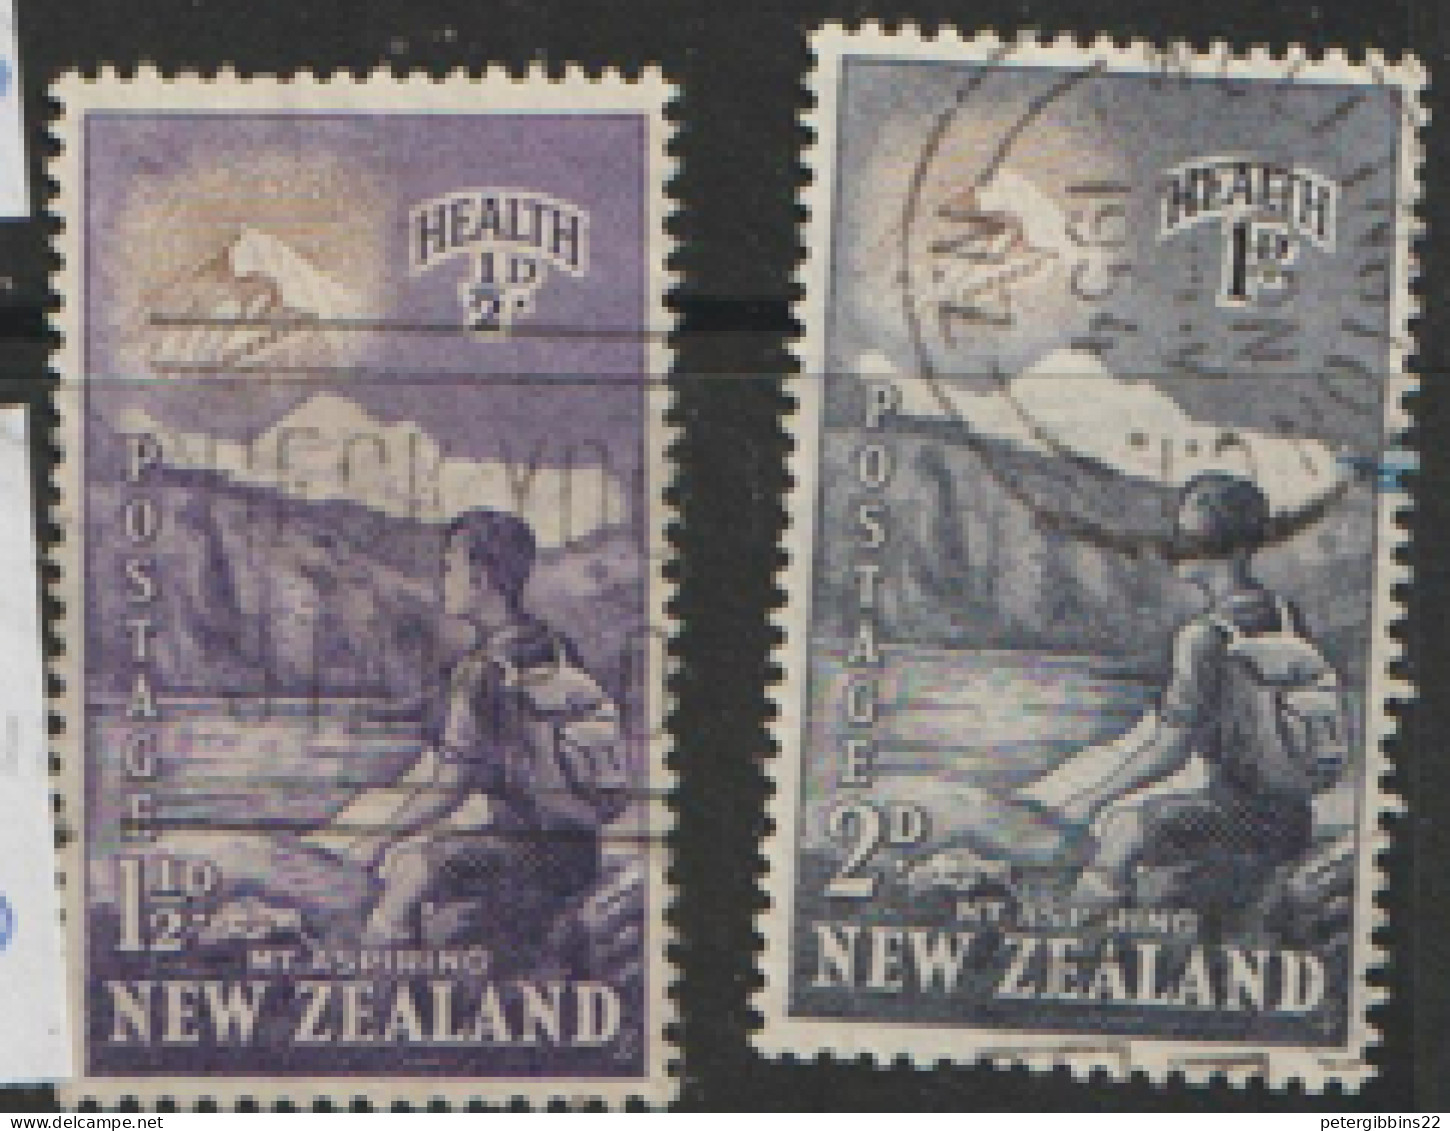 New  Zealand  1954  SG  737-8  Health    Fine Used   - Gebraucht